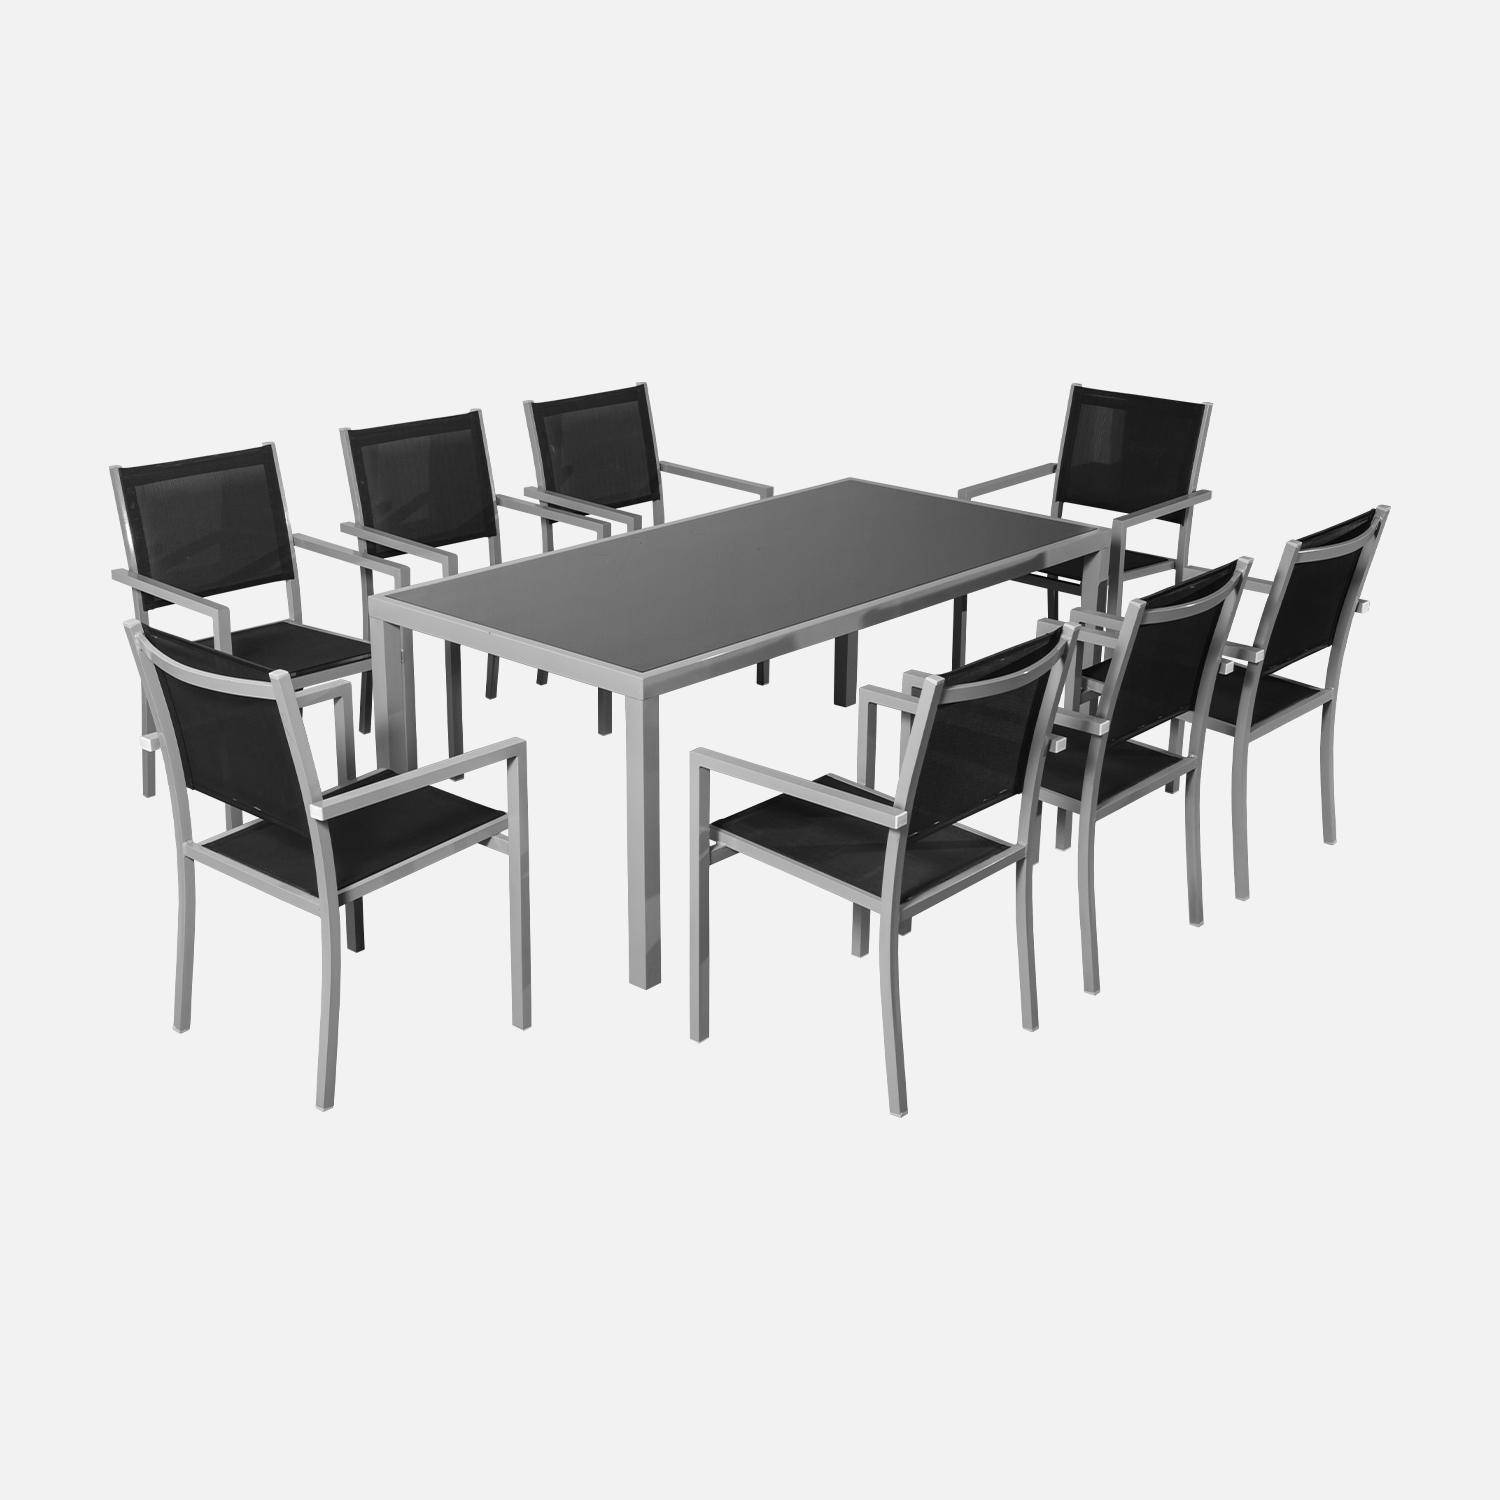 Gartengarnitur aus Aluminium und Textilene - Capua 180 cm - Grau, Schwarz - 8 Plätze - 1 großer rechteckiger Tisch, 8 stapelbare Sessel Photo2